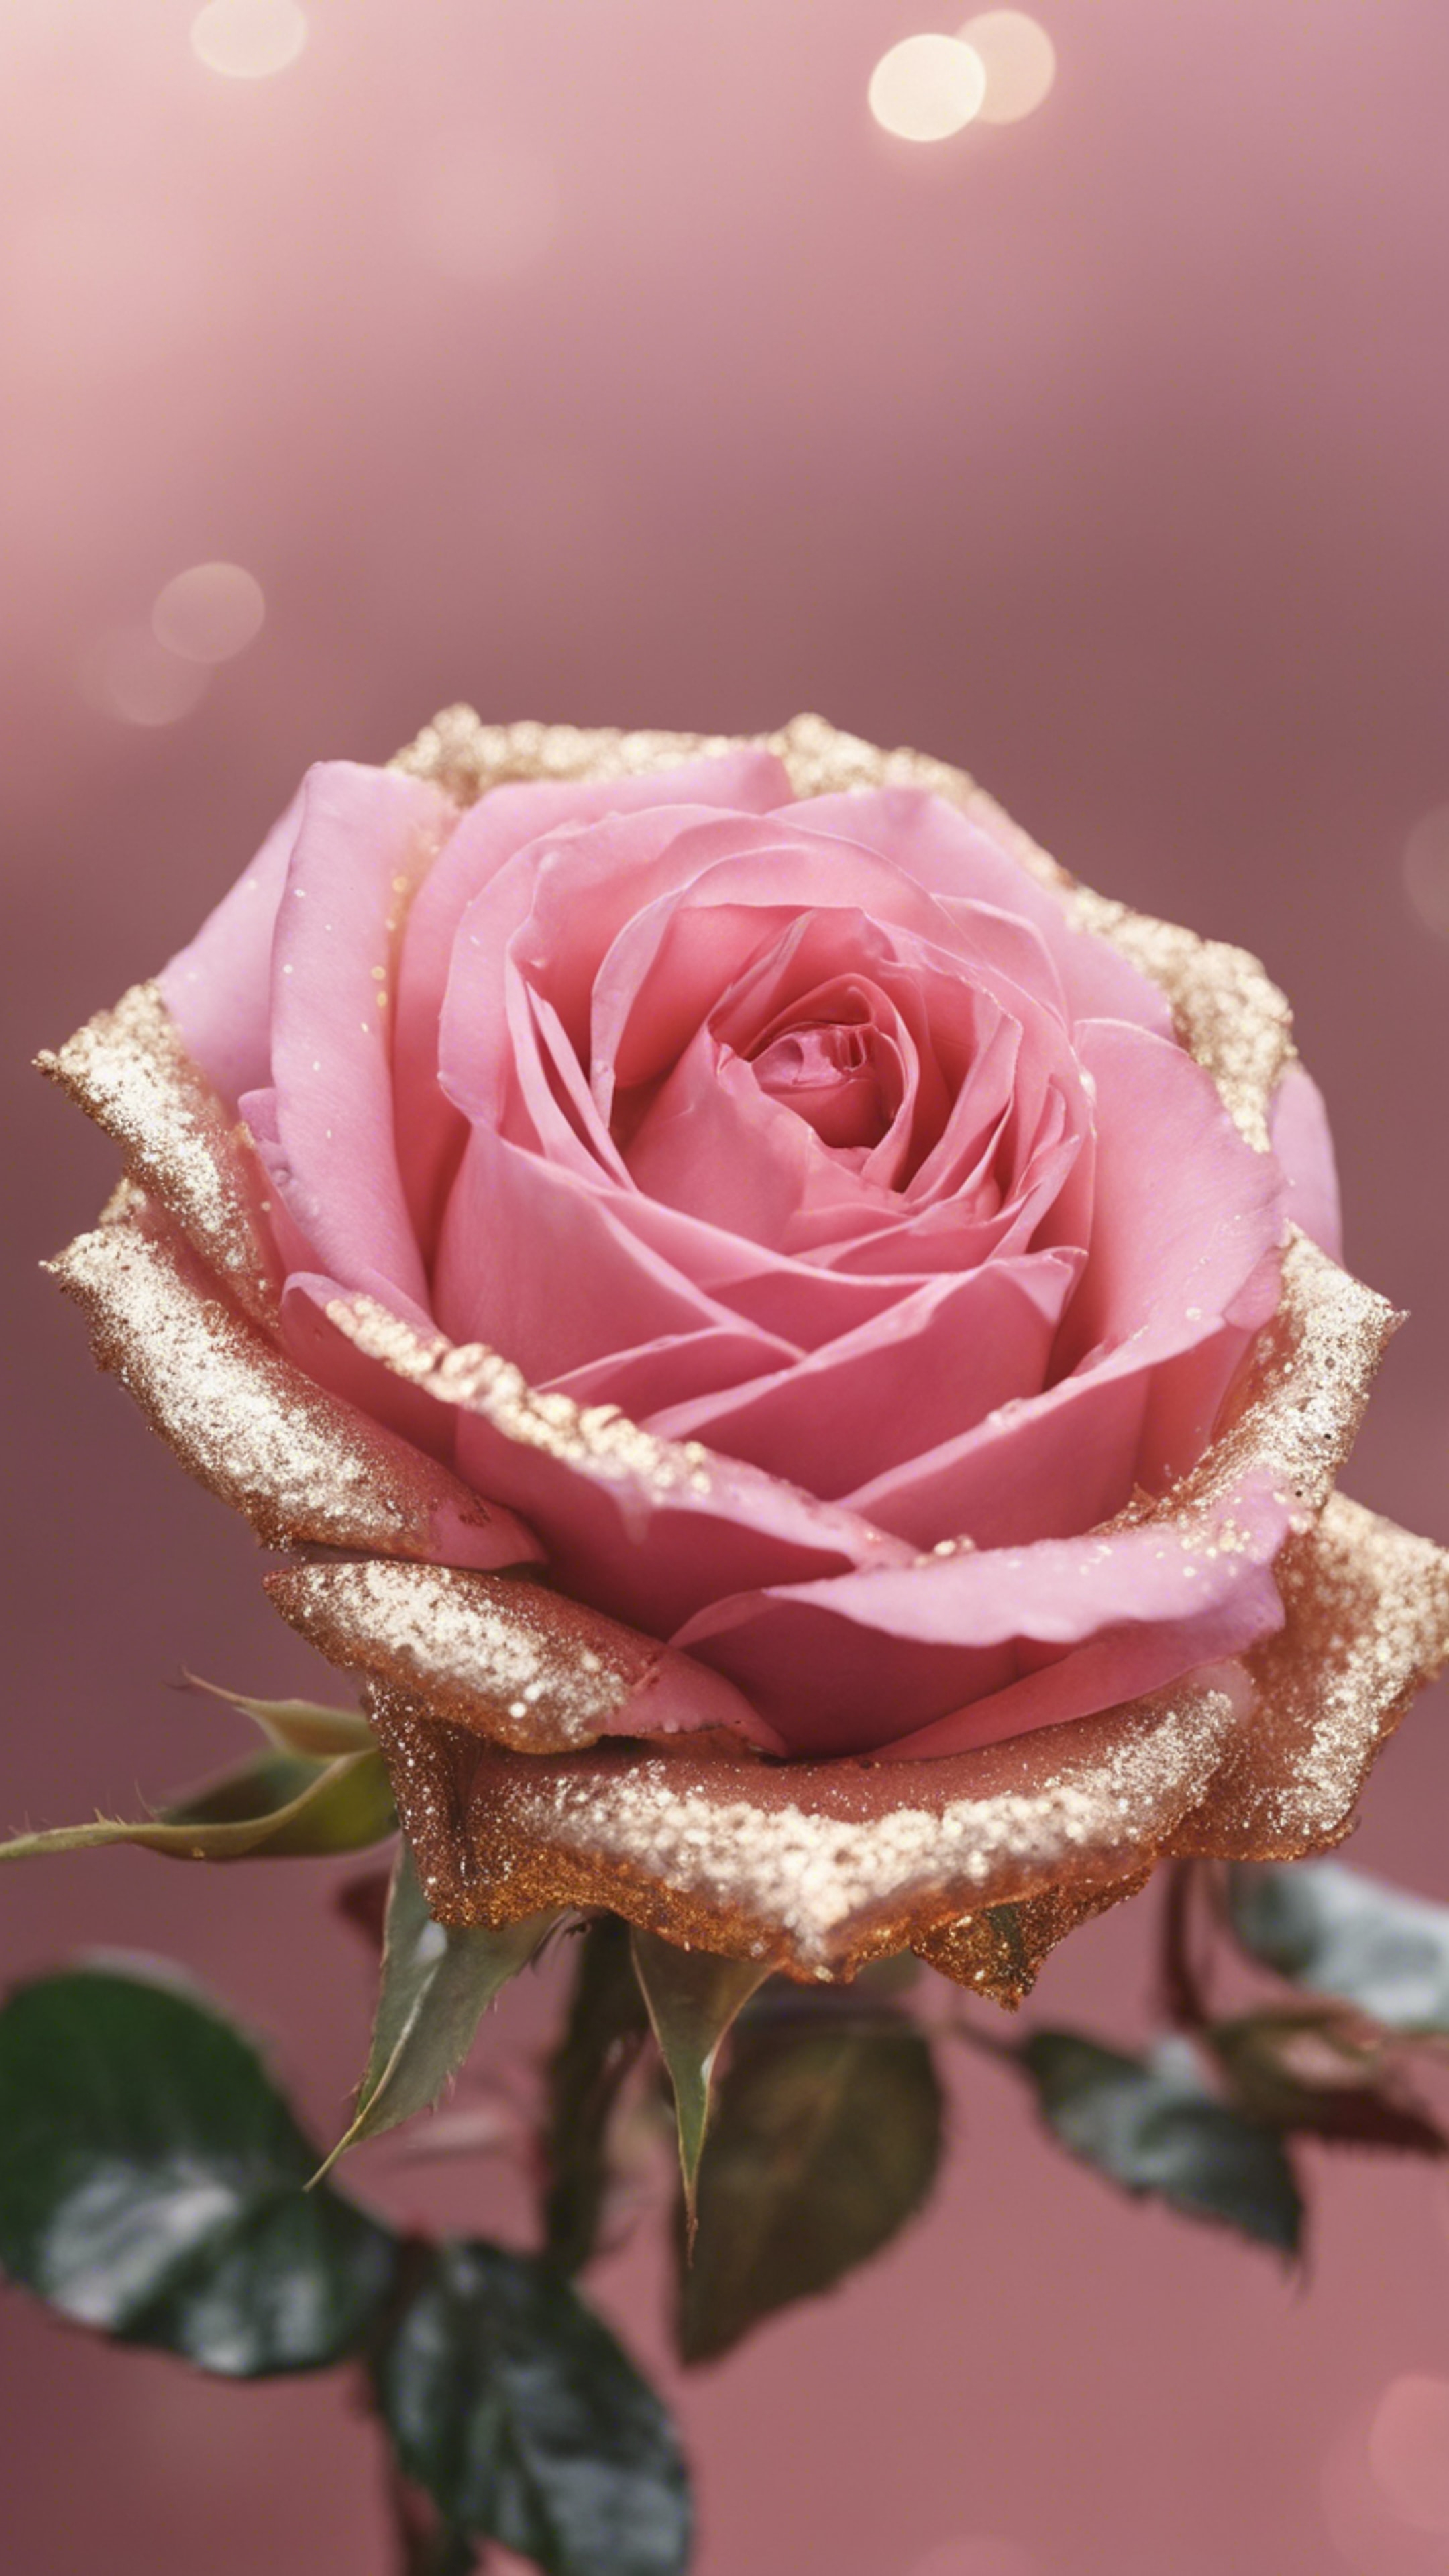 A closeup view of a beautiful pink rose with gold glittered edges. ផ្ទាំង​រូបភាព[3875274ebd404c0da9bb]